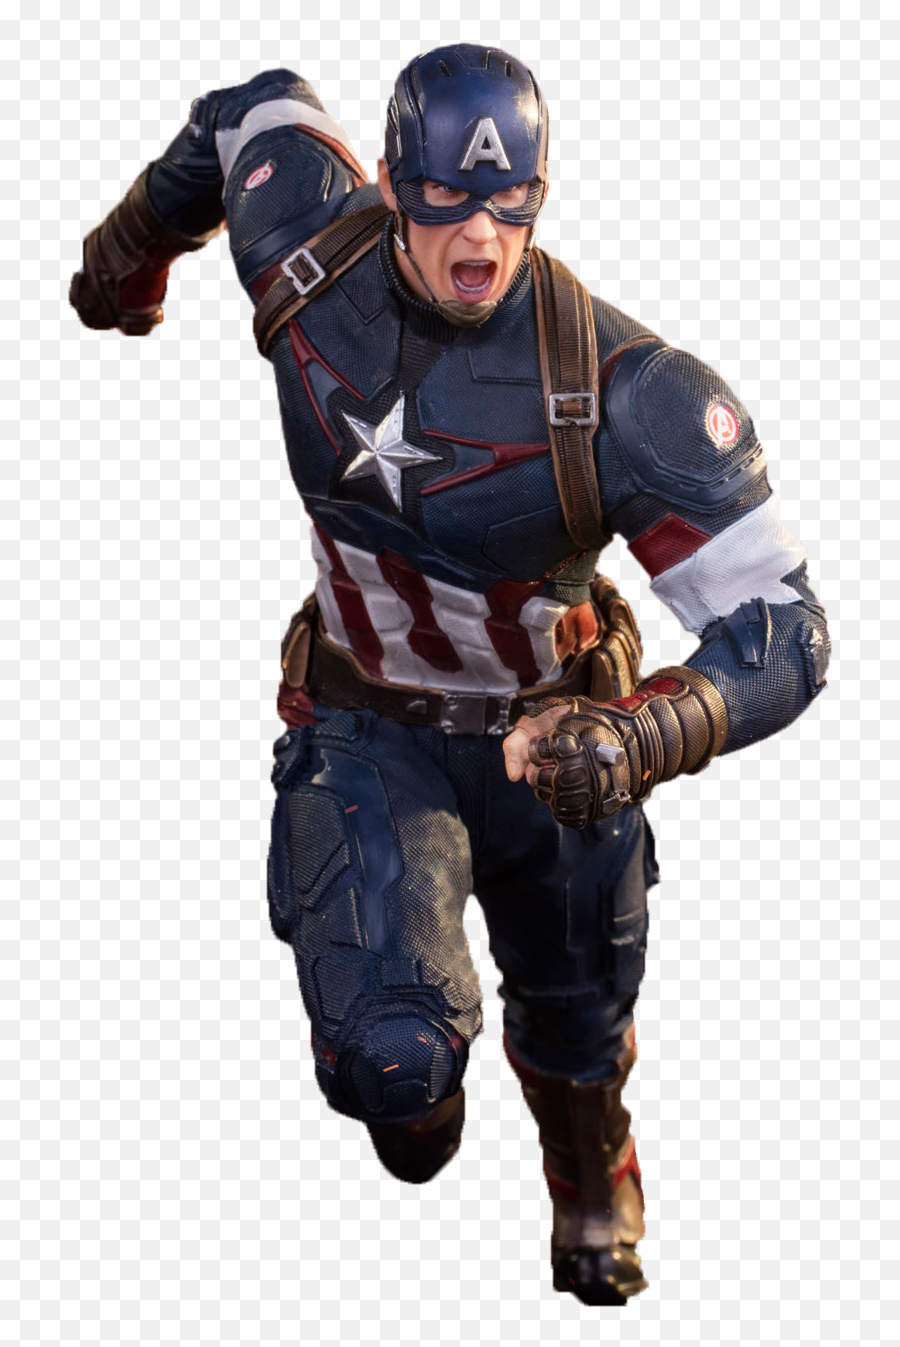 Chris Evans Is Marvelu0027s Captain America - Captain America Age Of Ultron Png,Chris Evans Png